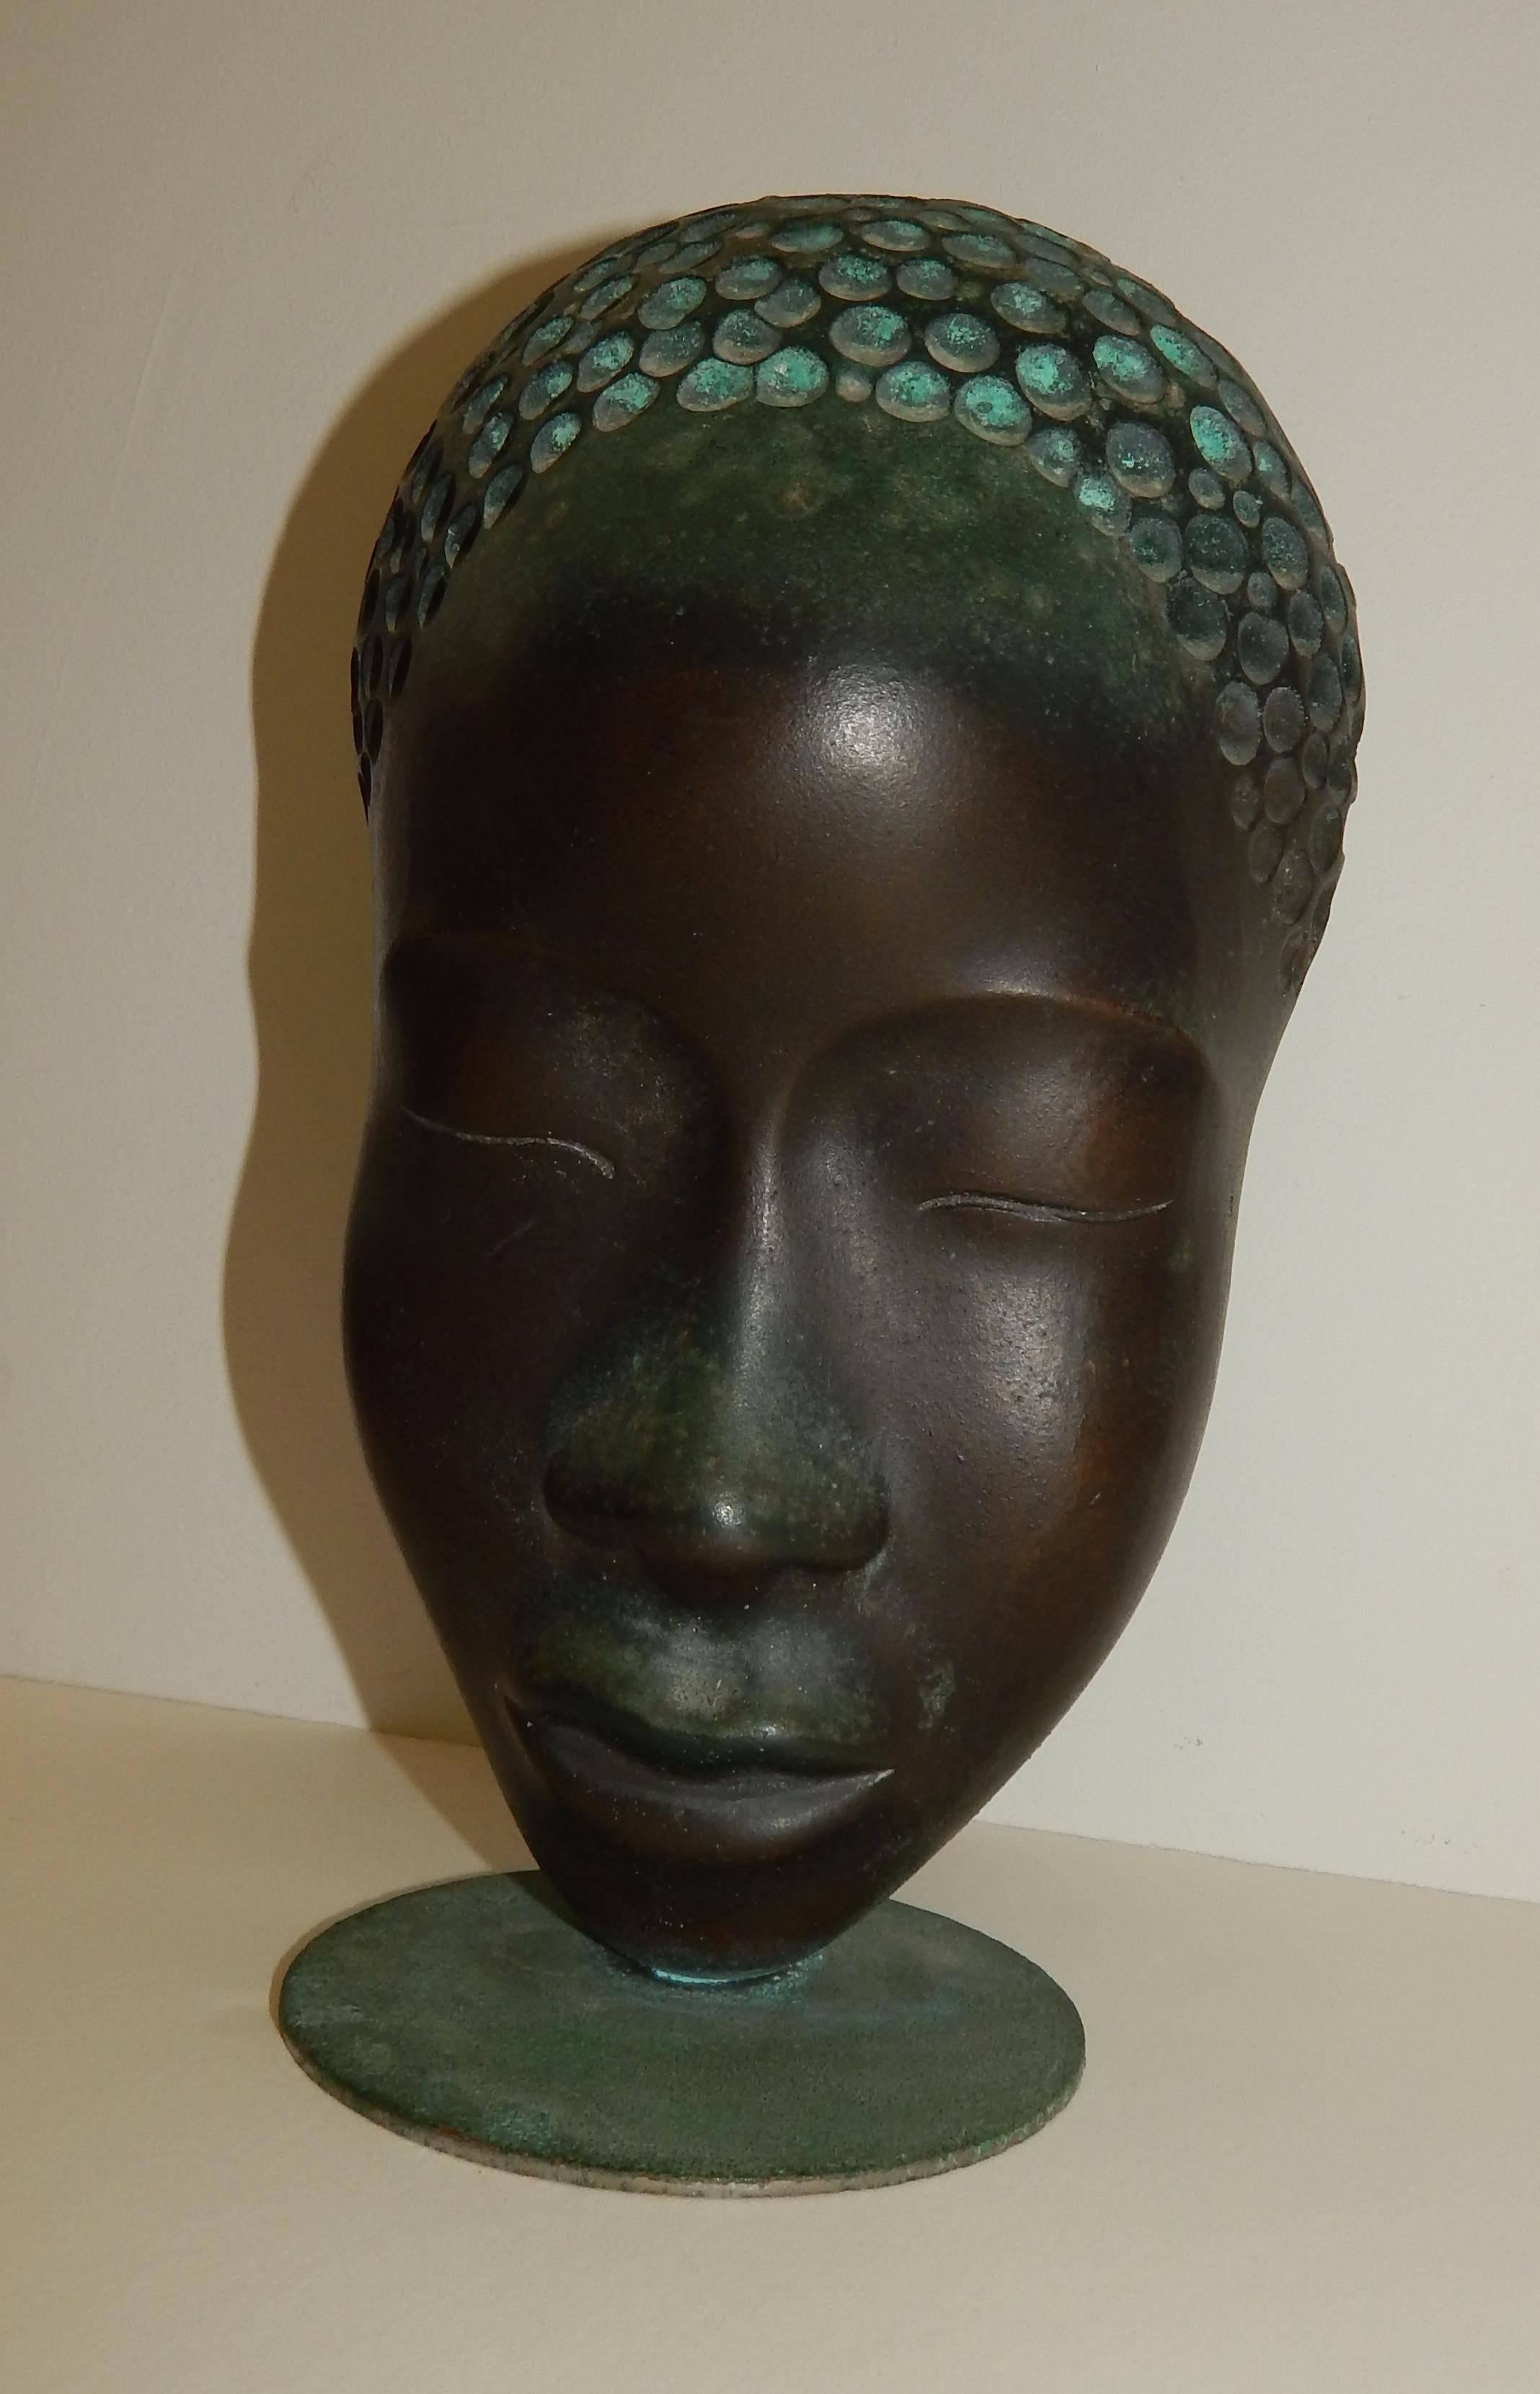 Hagenauer African woman, portrait in bronze. Beautiful patina.
Black subject. Marked Atelier Hagenauer Wien, Made in Austria.
Measures: 9